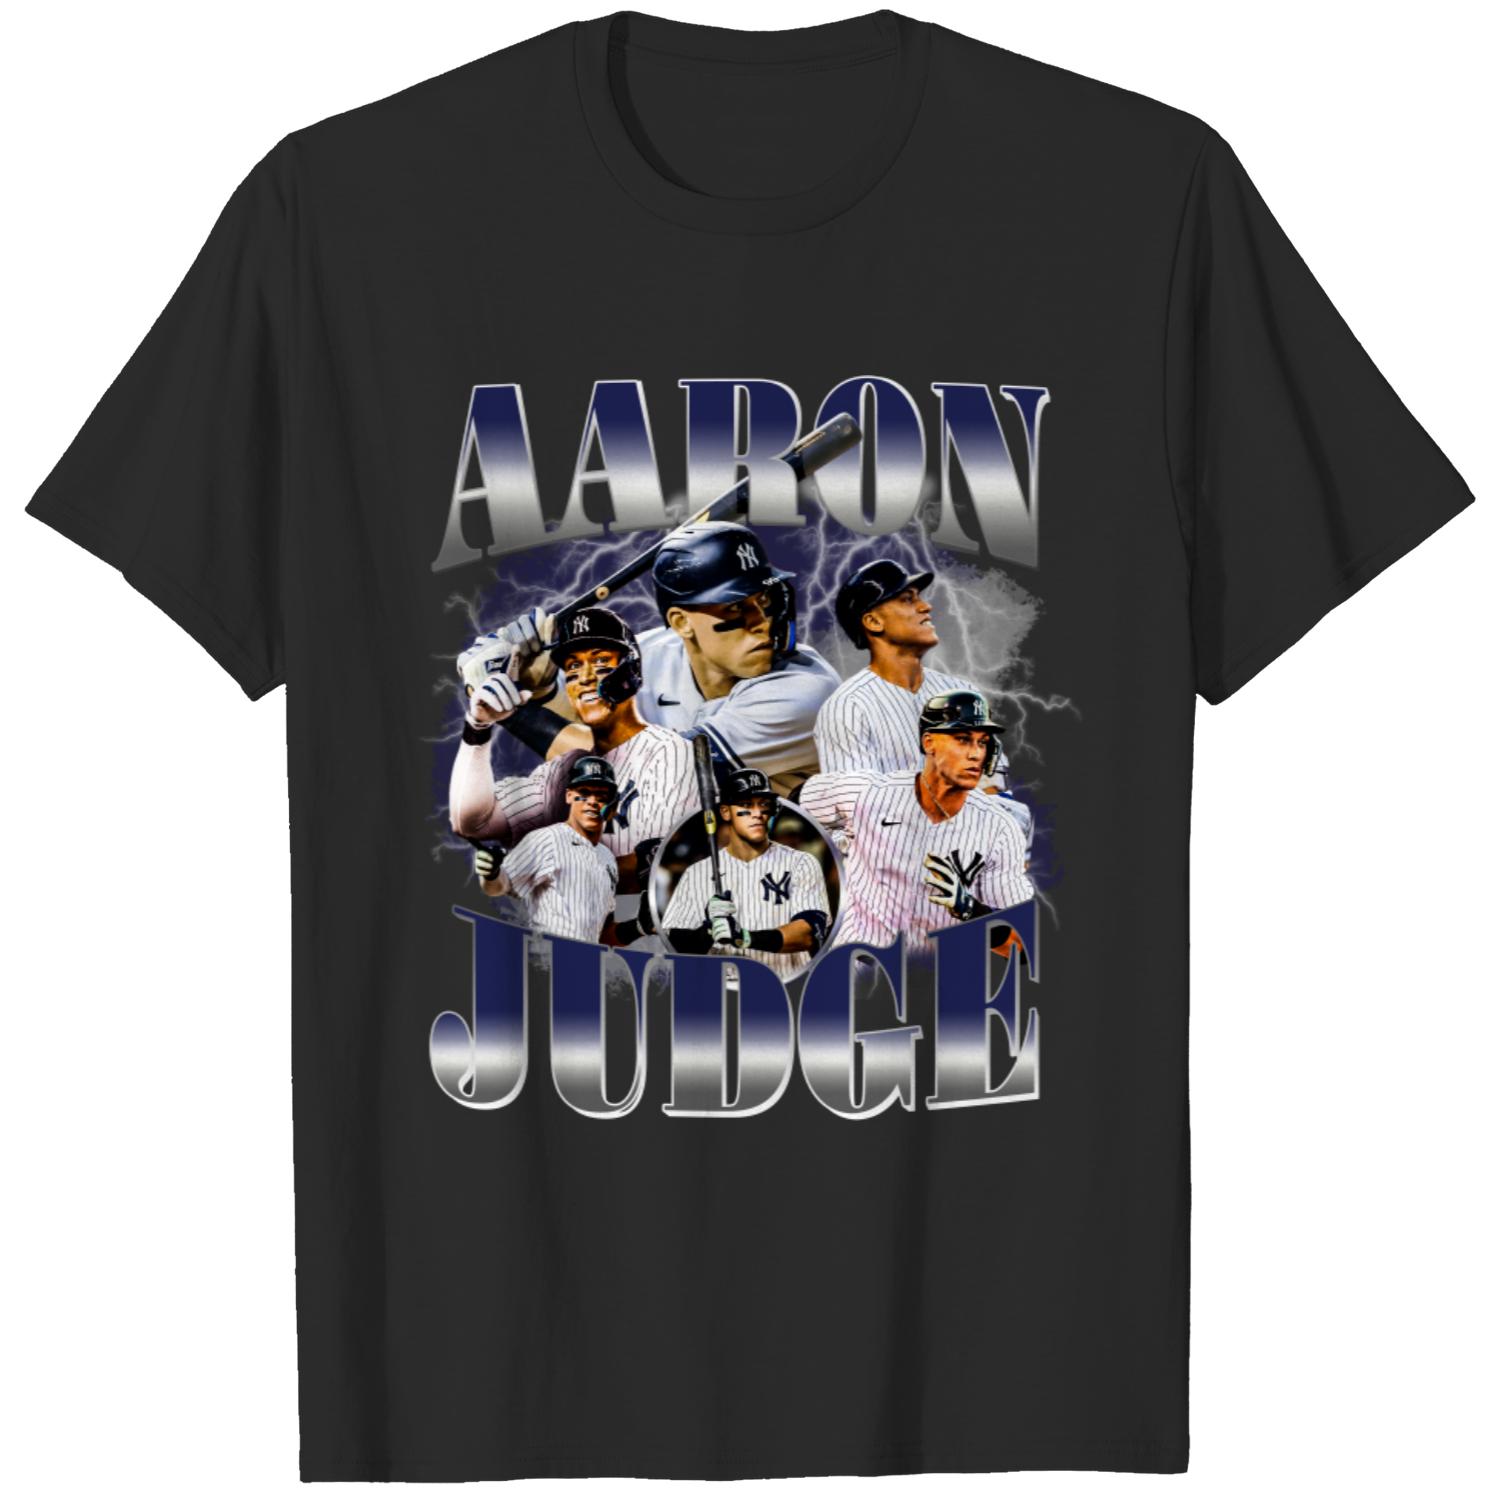 Aaron Judge Shirt, Judge TShirt, Judge Baseball Player Shirt